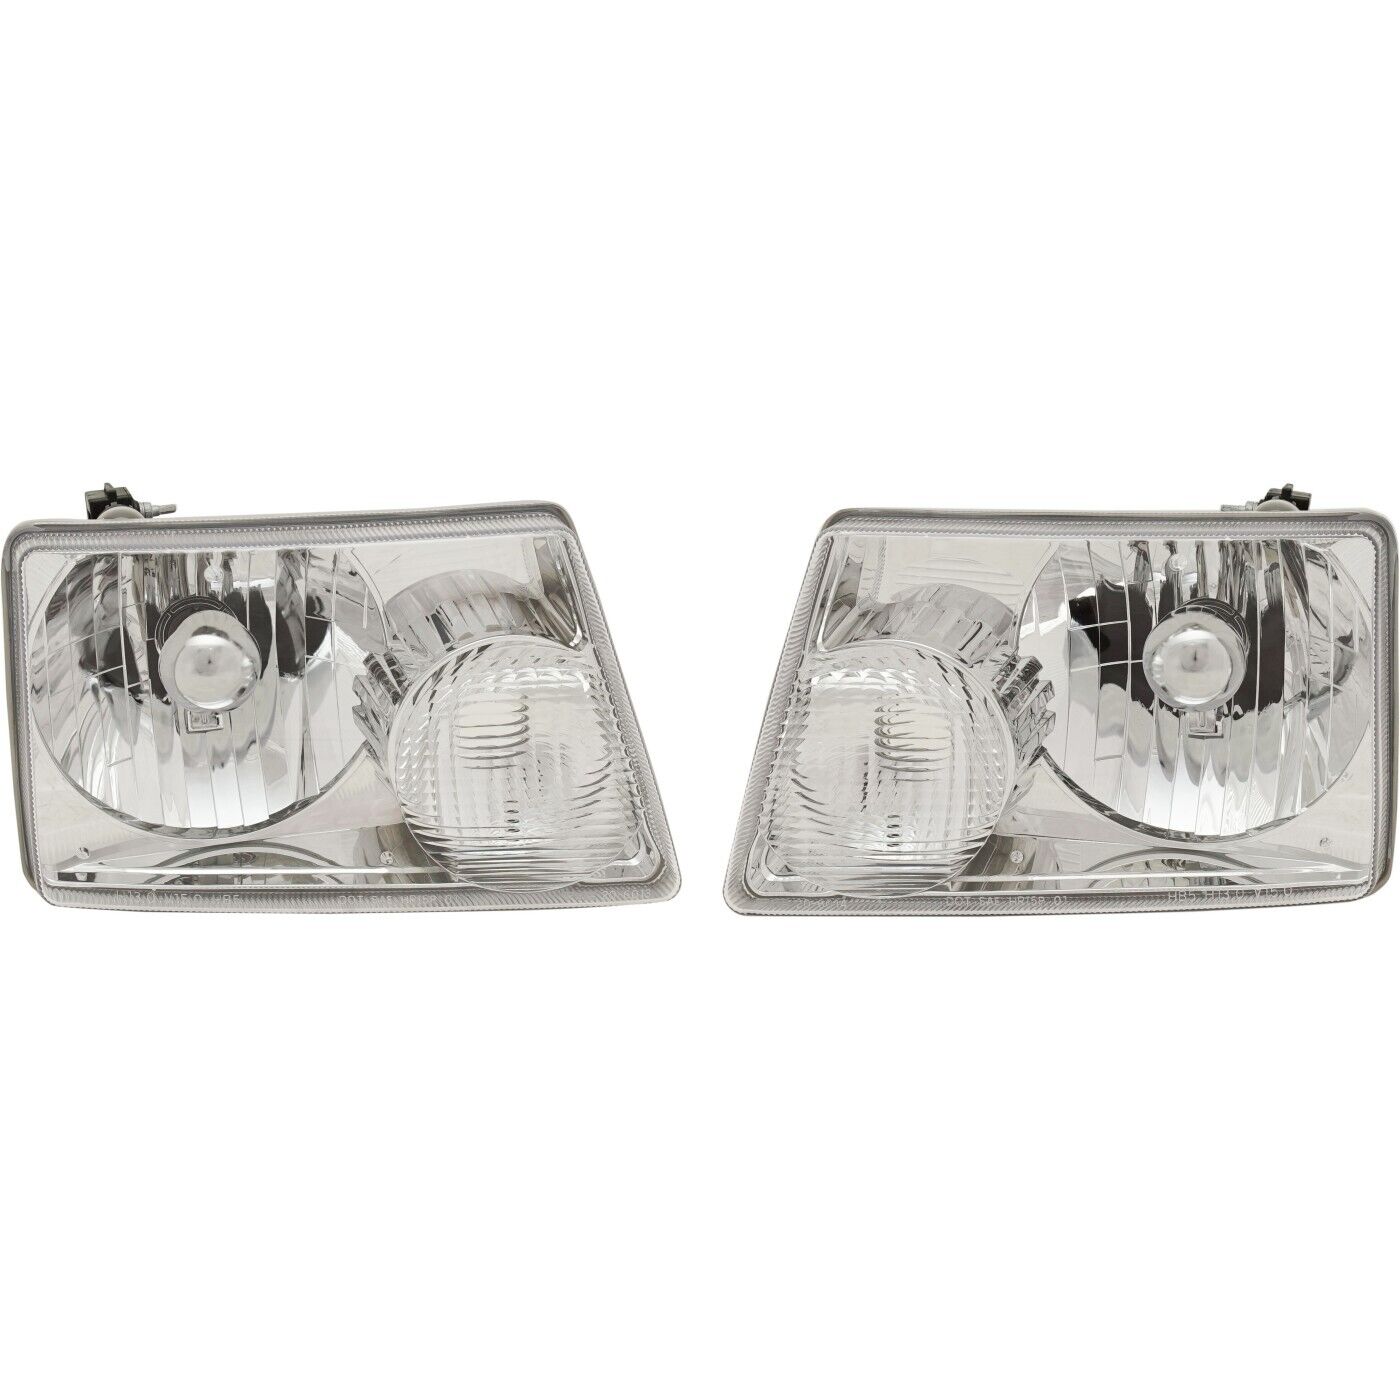 Headlights Headlamps Left & Right Pair Set for 01-11 Ford Ranger Pickup Truck